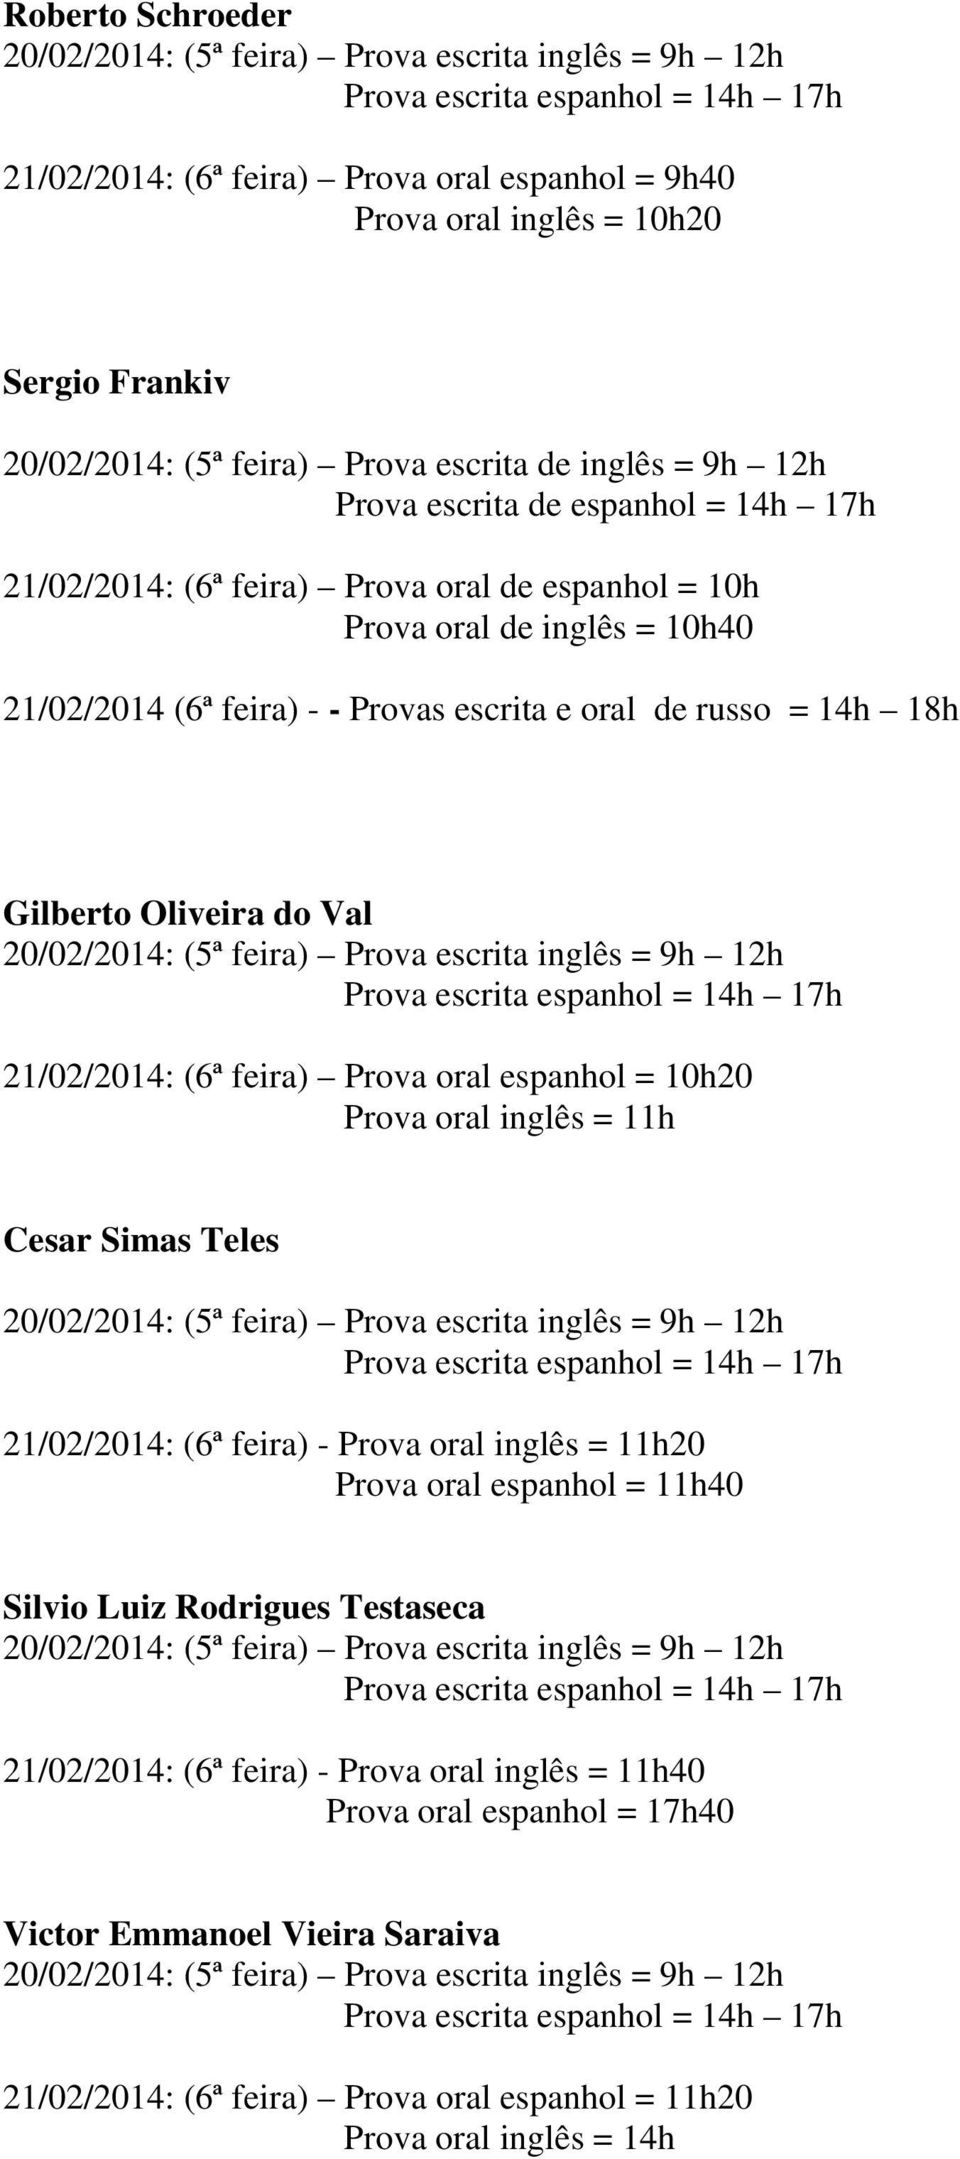 Prova oral inglês = 11h Cesar Simas Teles 21/02/2014: (6ª feira) - Prova oral inglês = 11h20 Prova oral espanhol = 11h40 Silvio Luiz Rodrigues Testaseca 21/02/2014: